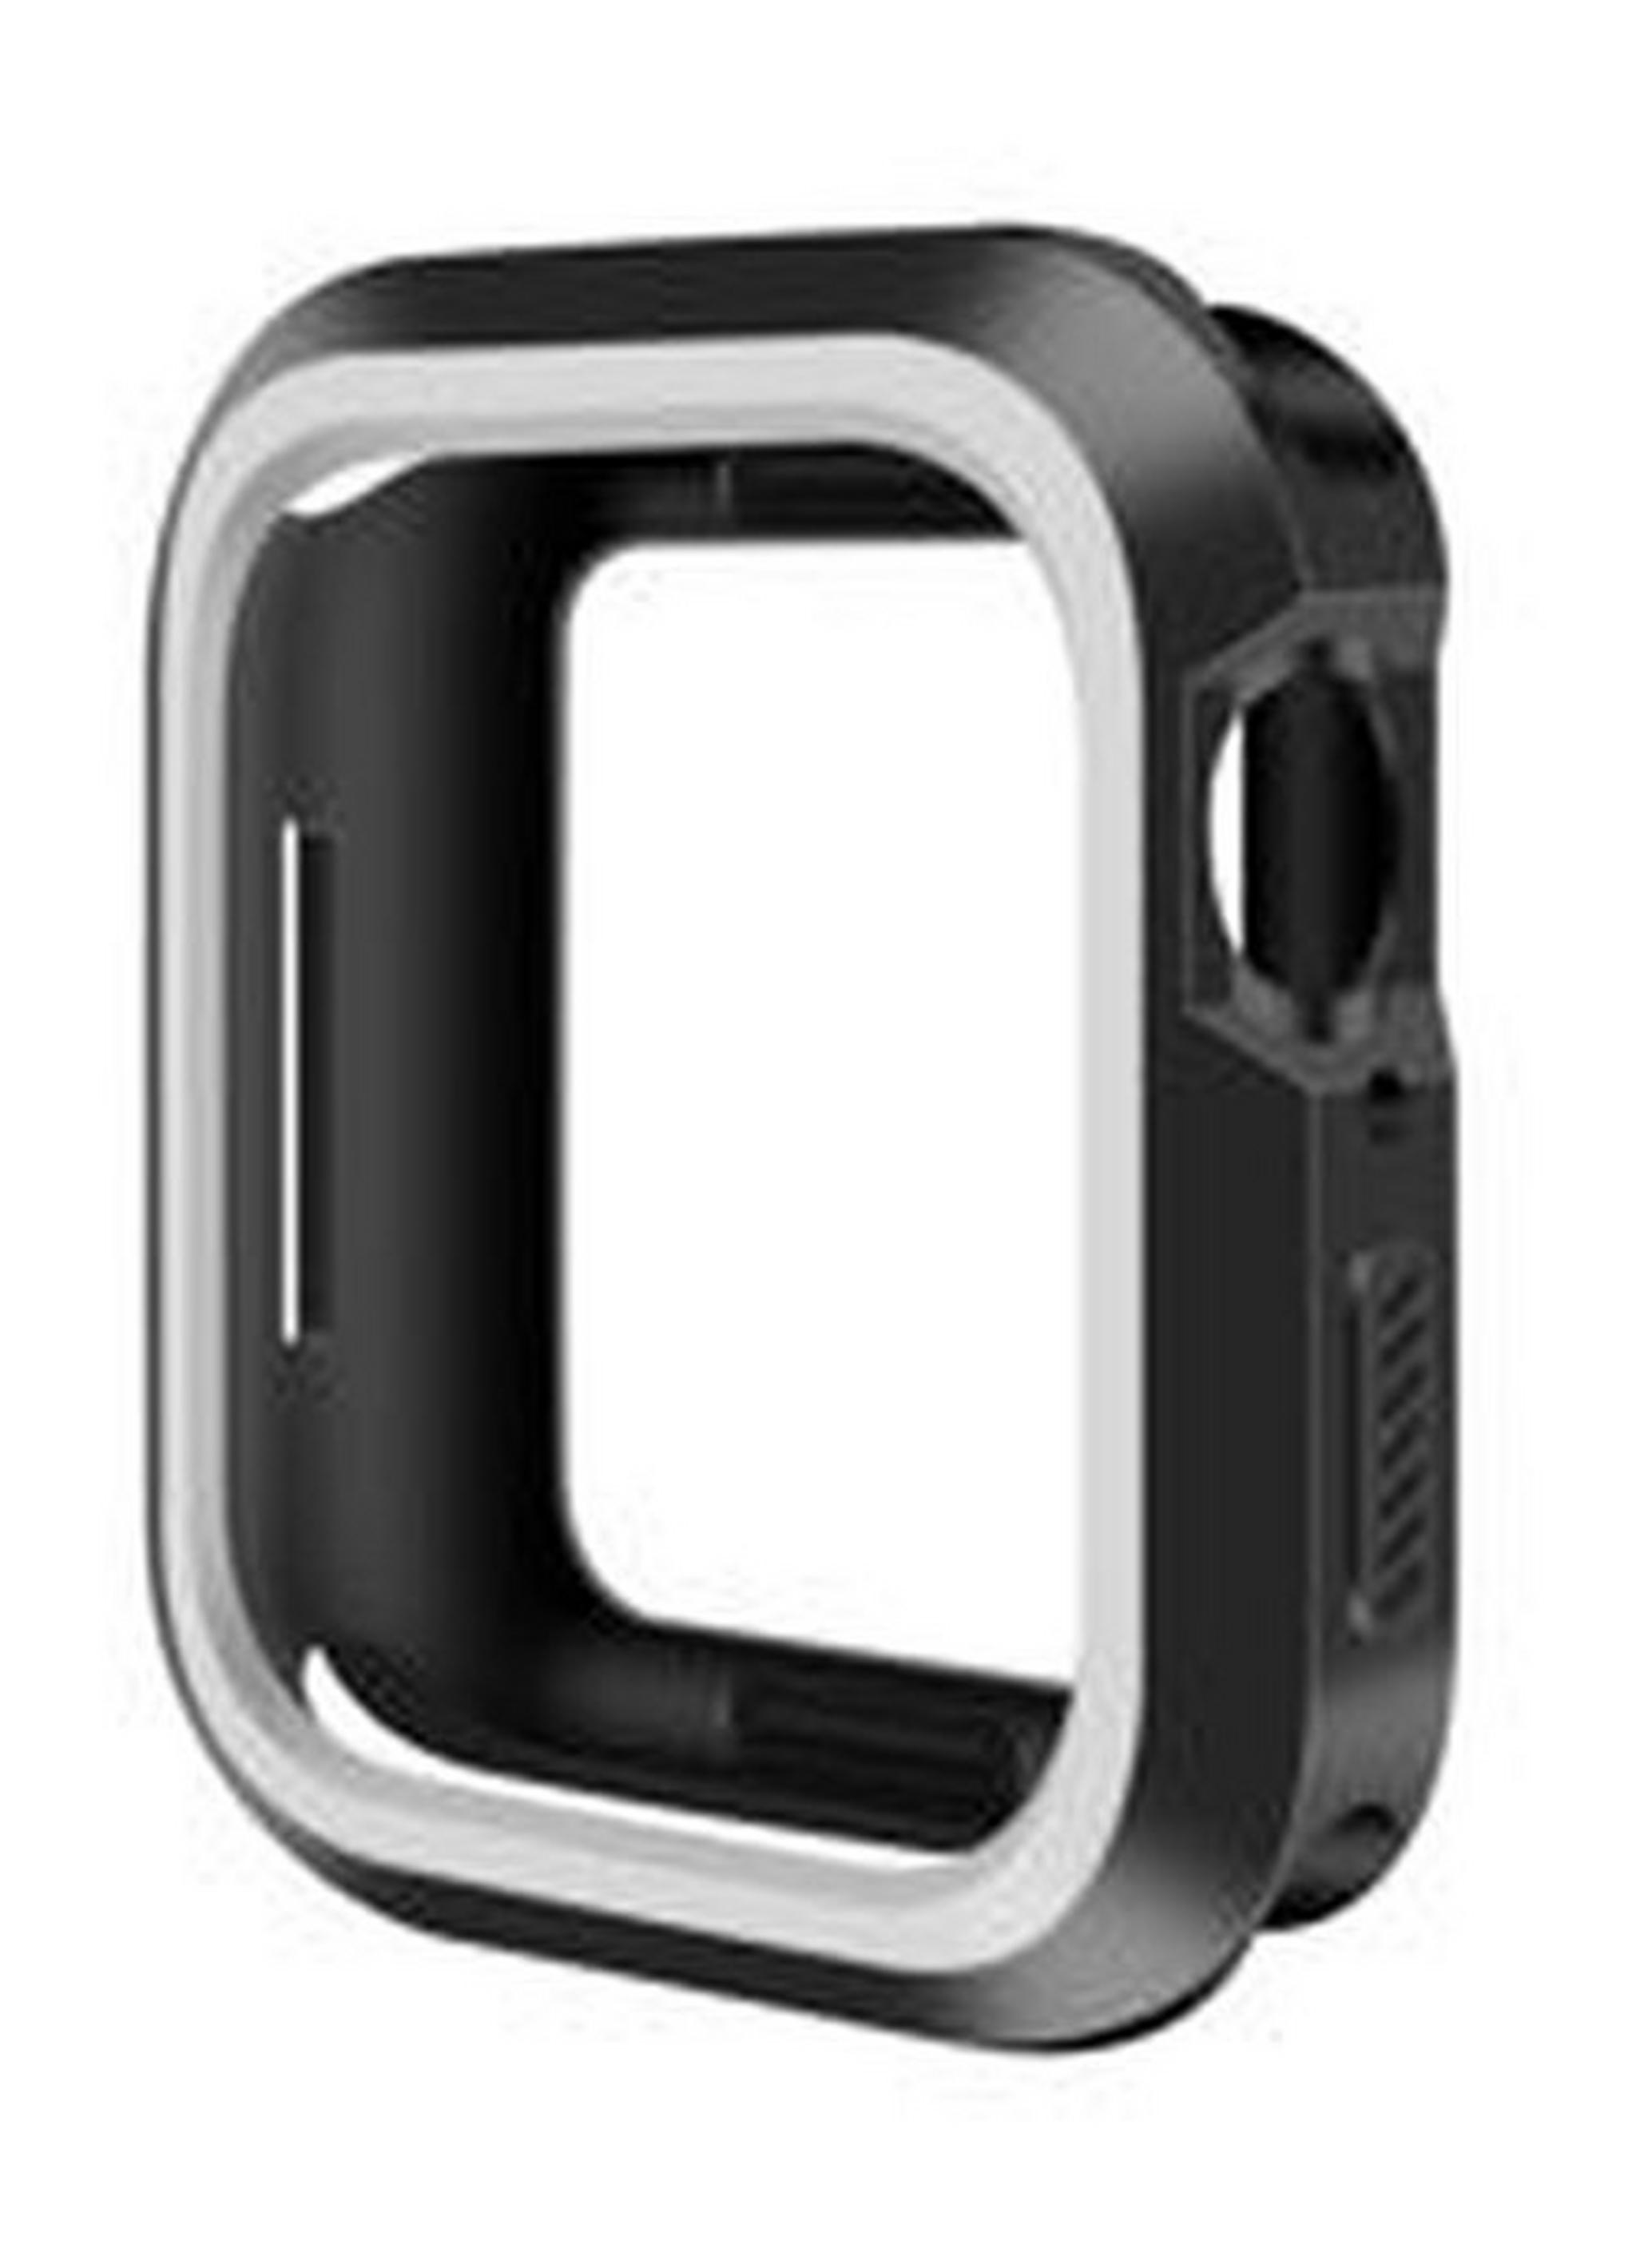 EQ Apple Watch S4 Bumper Case - Black/Grey